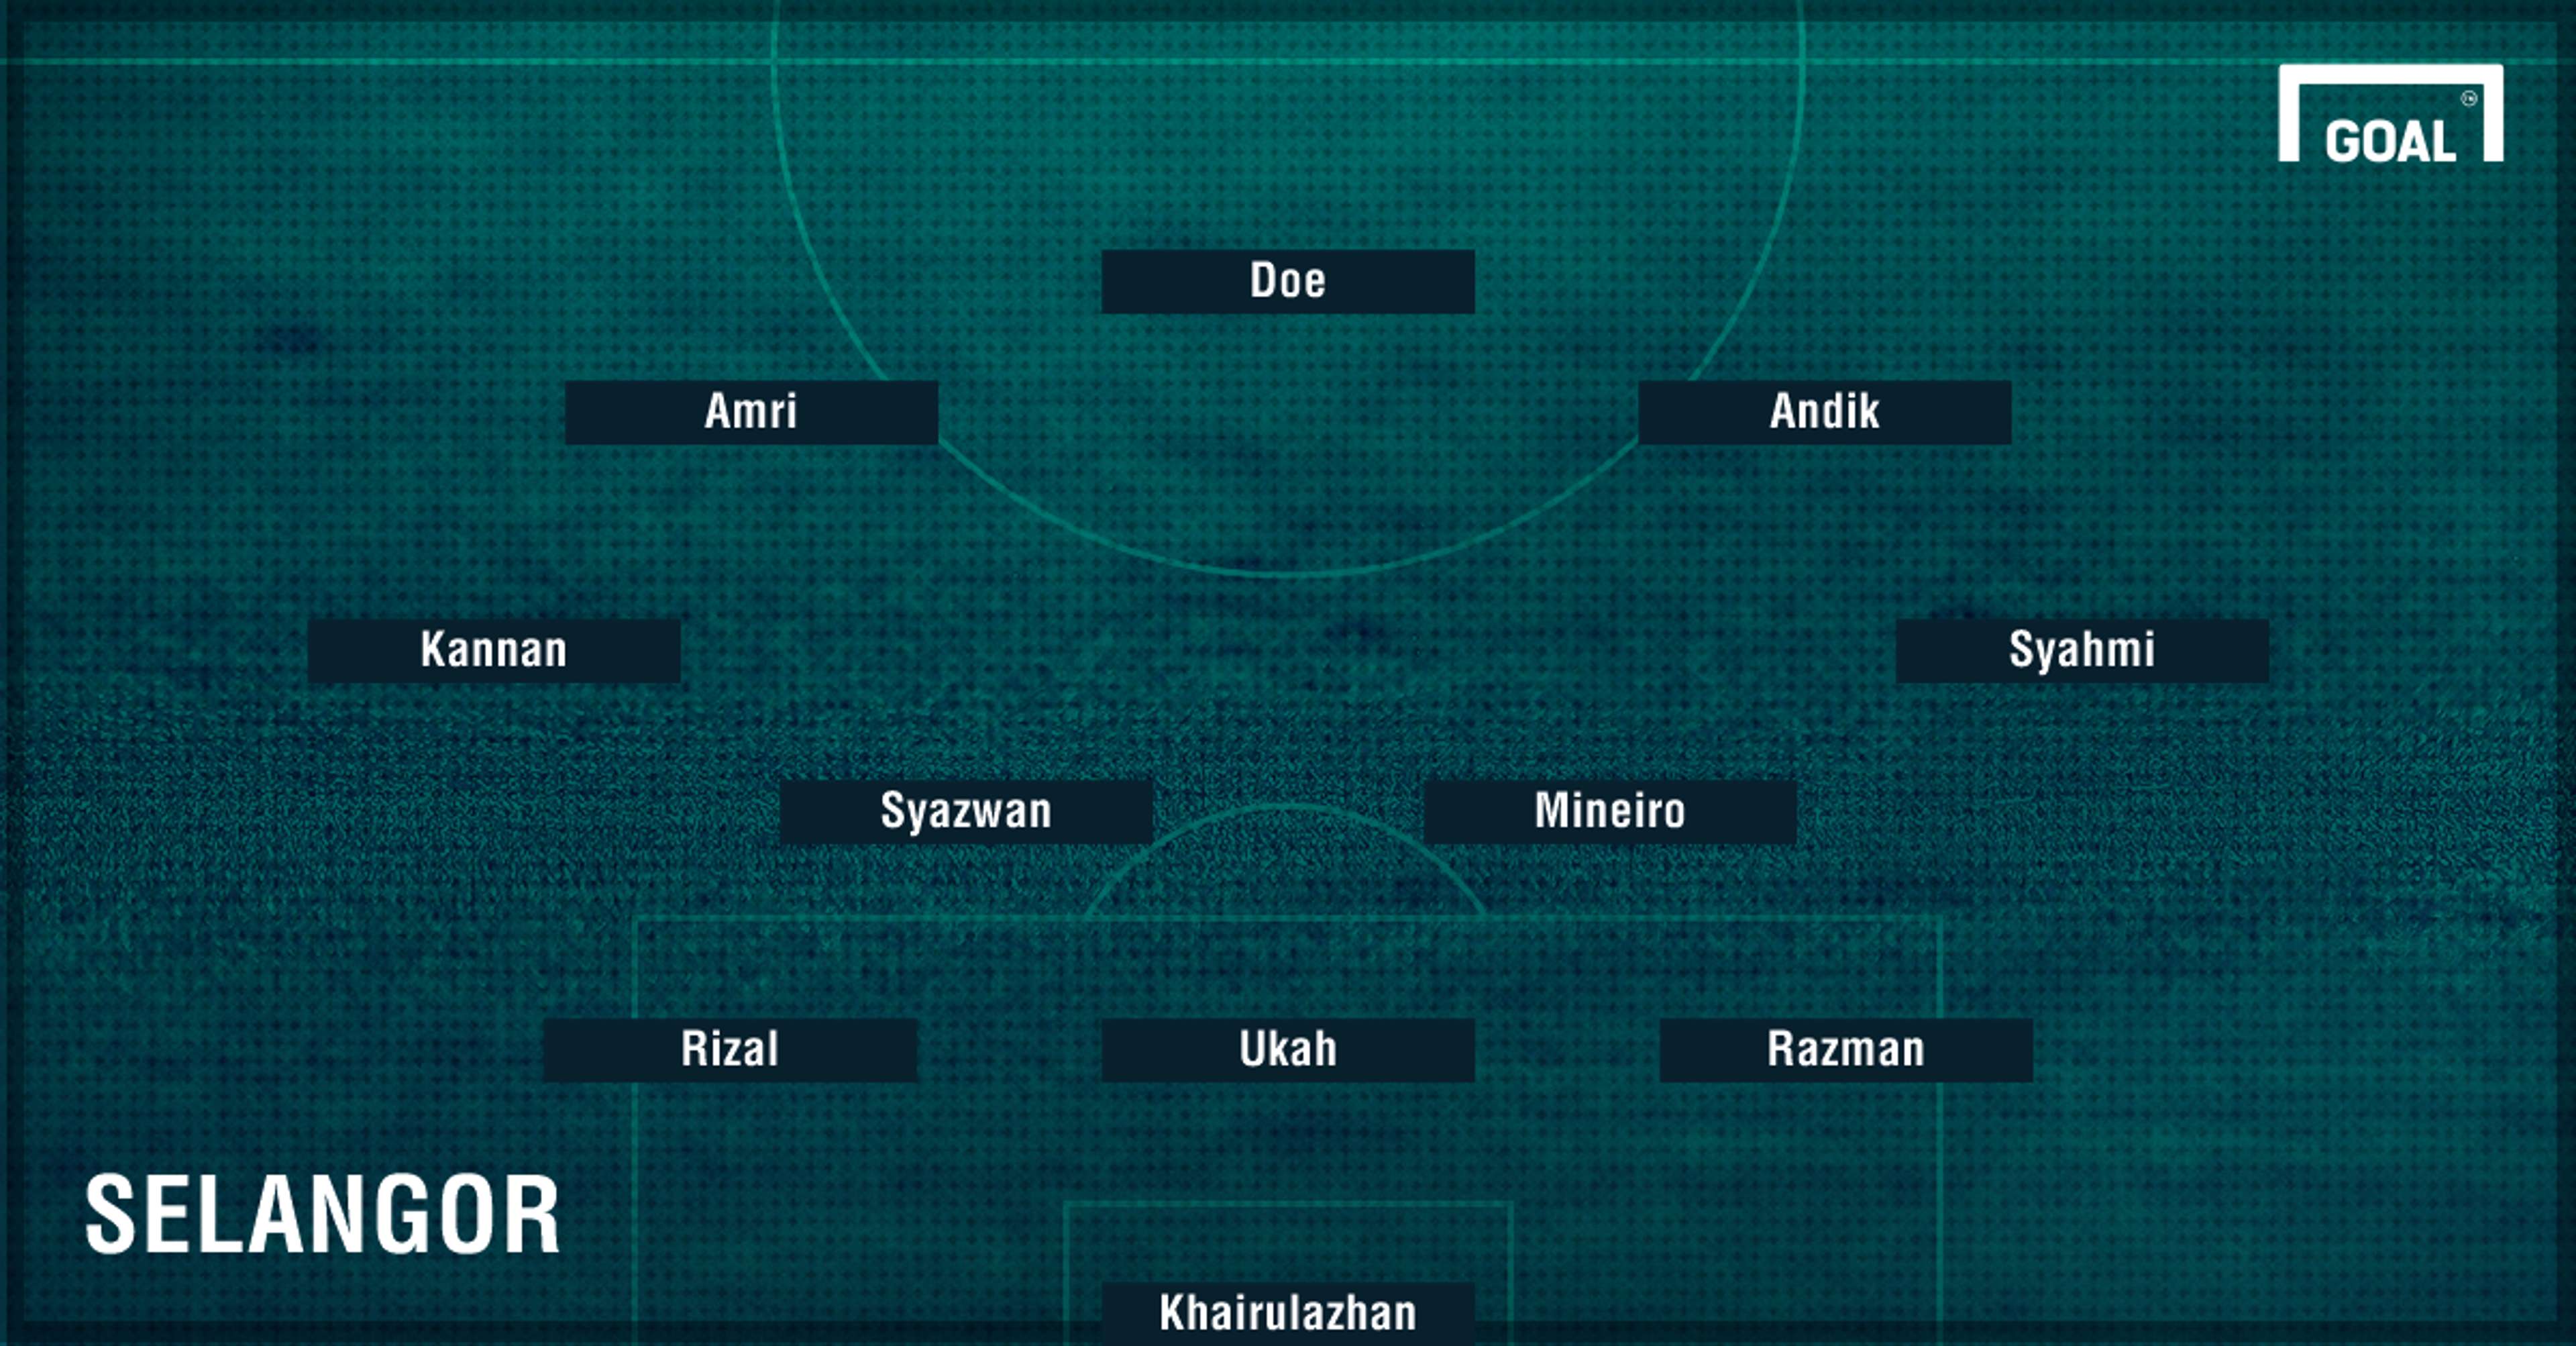 Selangor line-up after Amri and Andik's return